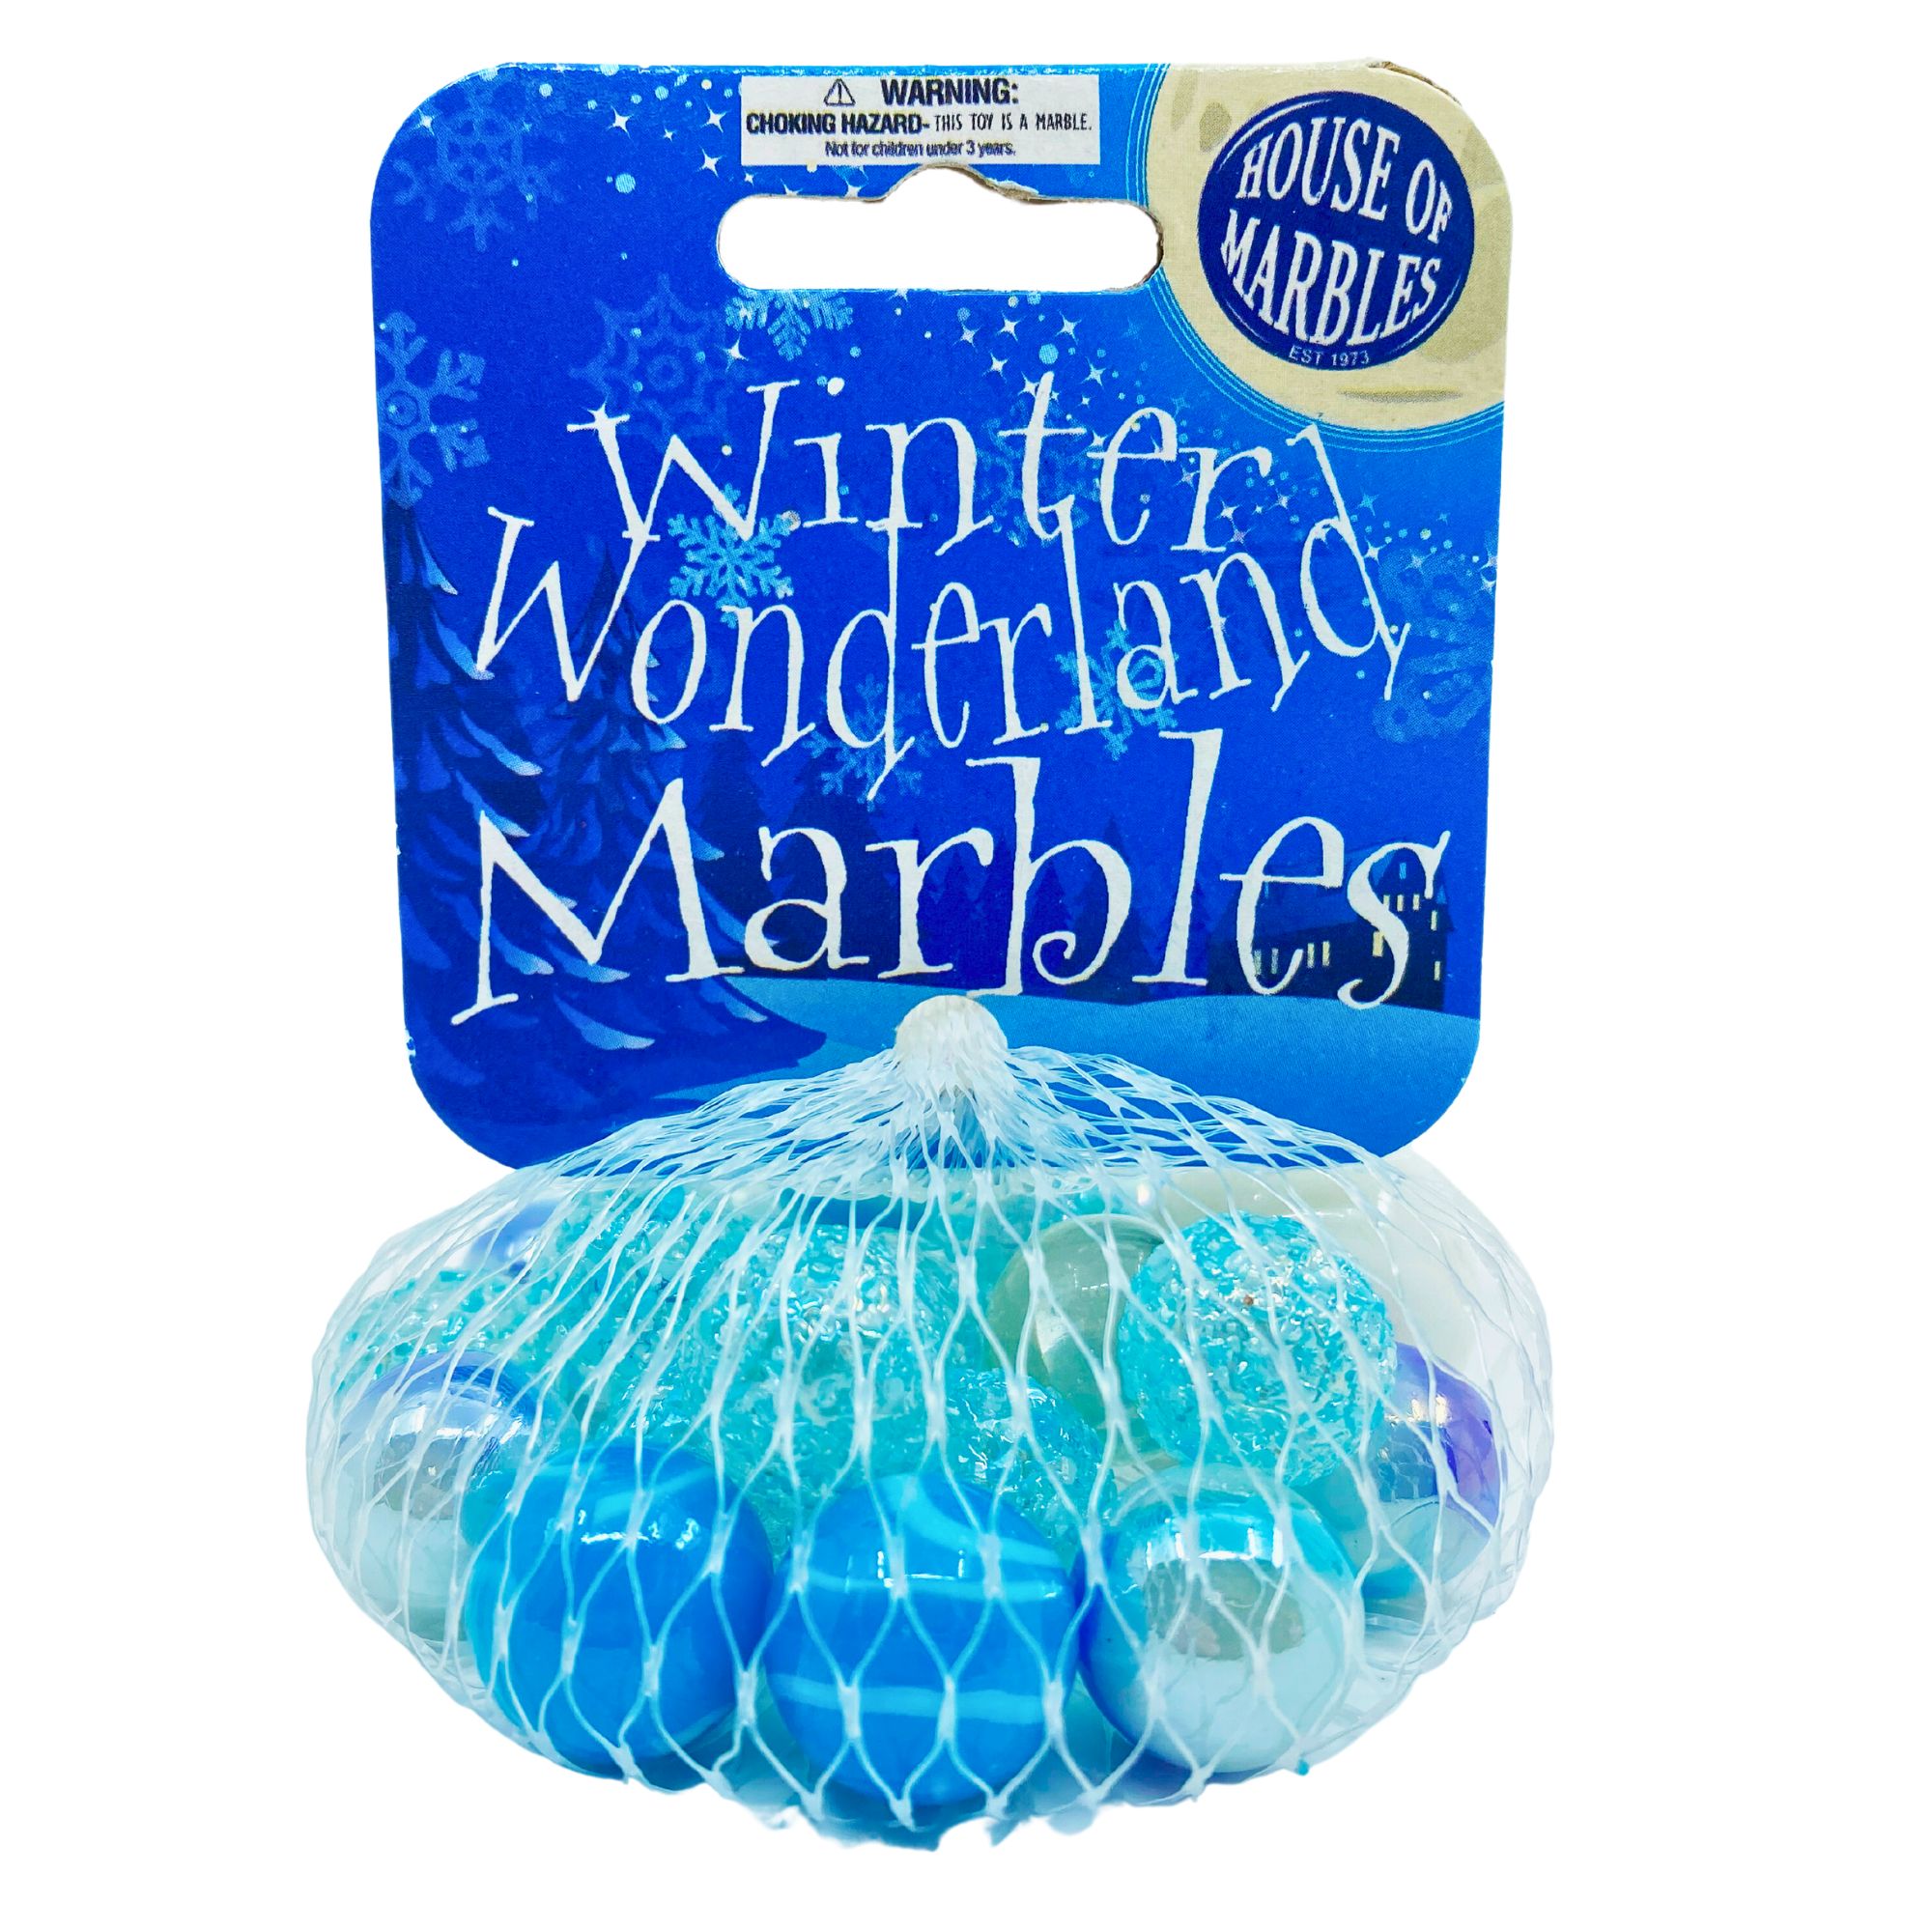 Net Bag Marbles - Winter Wonderland, packaged